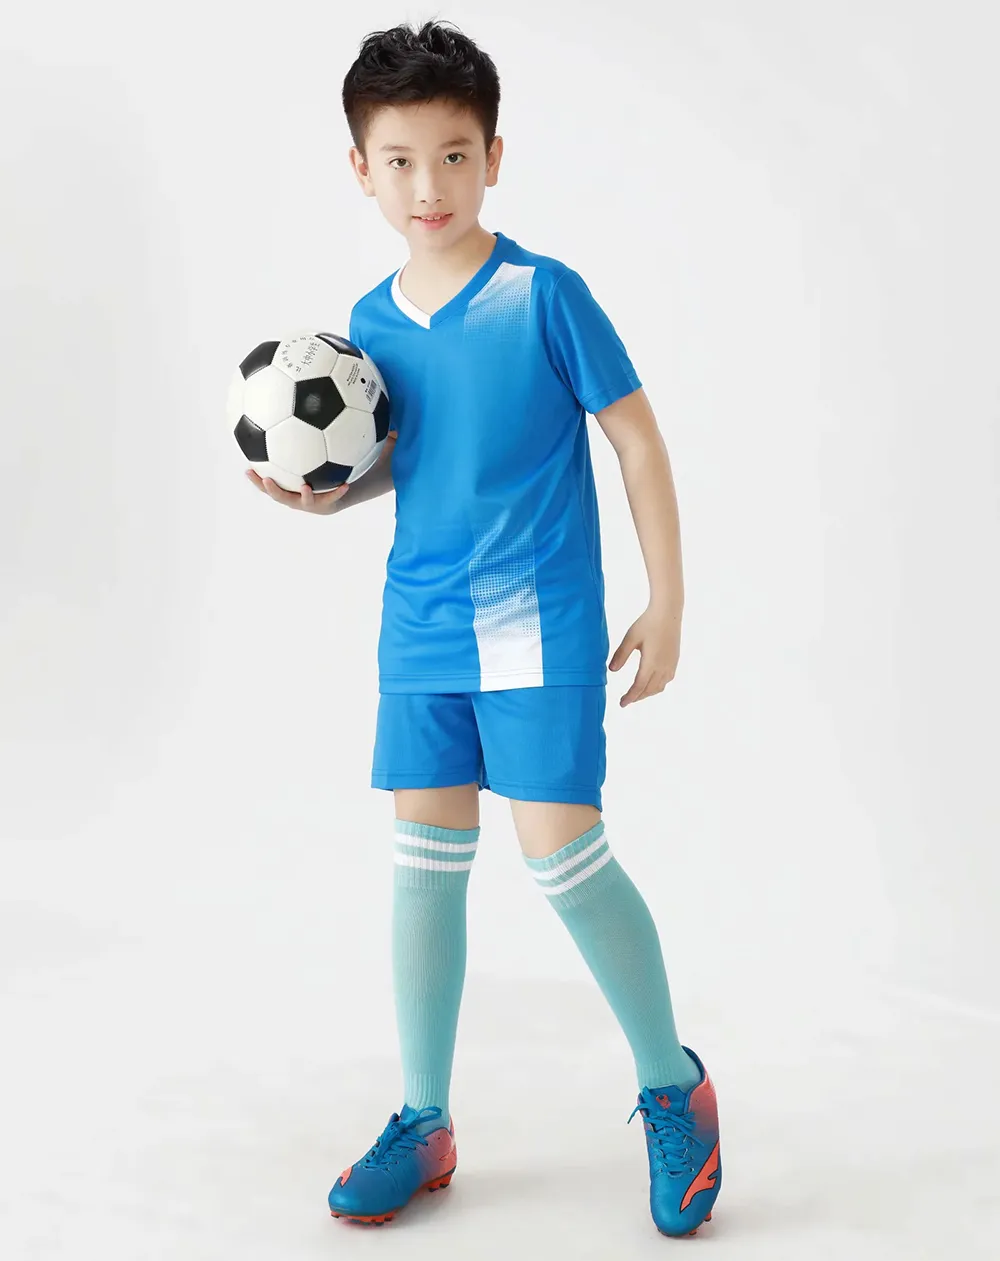 Jessie_kicks #G461 LJR aiir joordan 5 Design 2021 Mode Trikots Kinderbekleidung Ourtdoor Sport